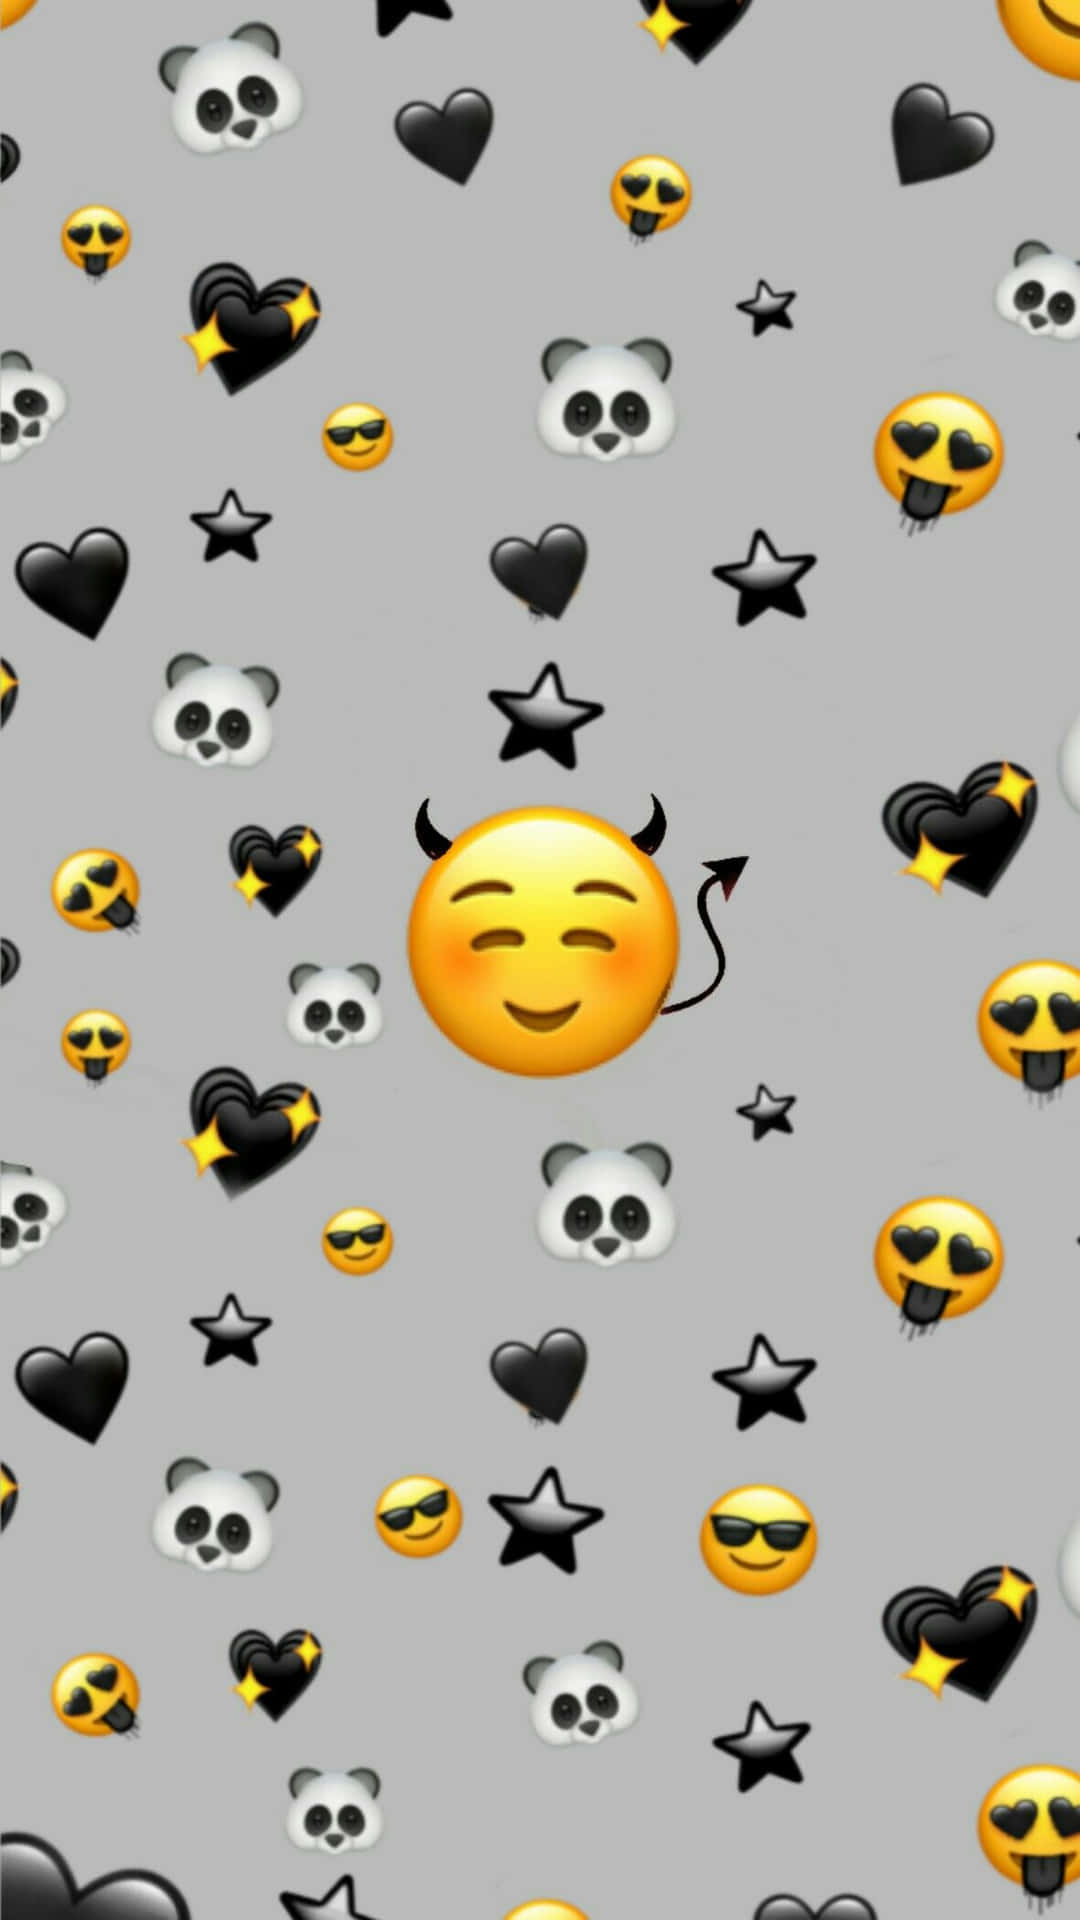 Free Cute Emoji Wallpaper Downloads, [100+] Cute Emoji Wallpapers for FREE  